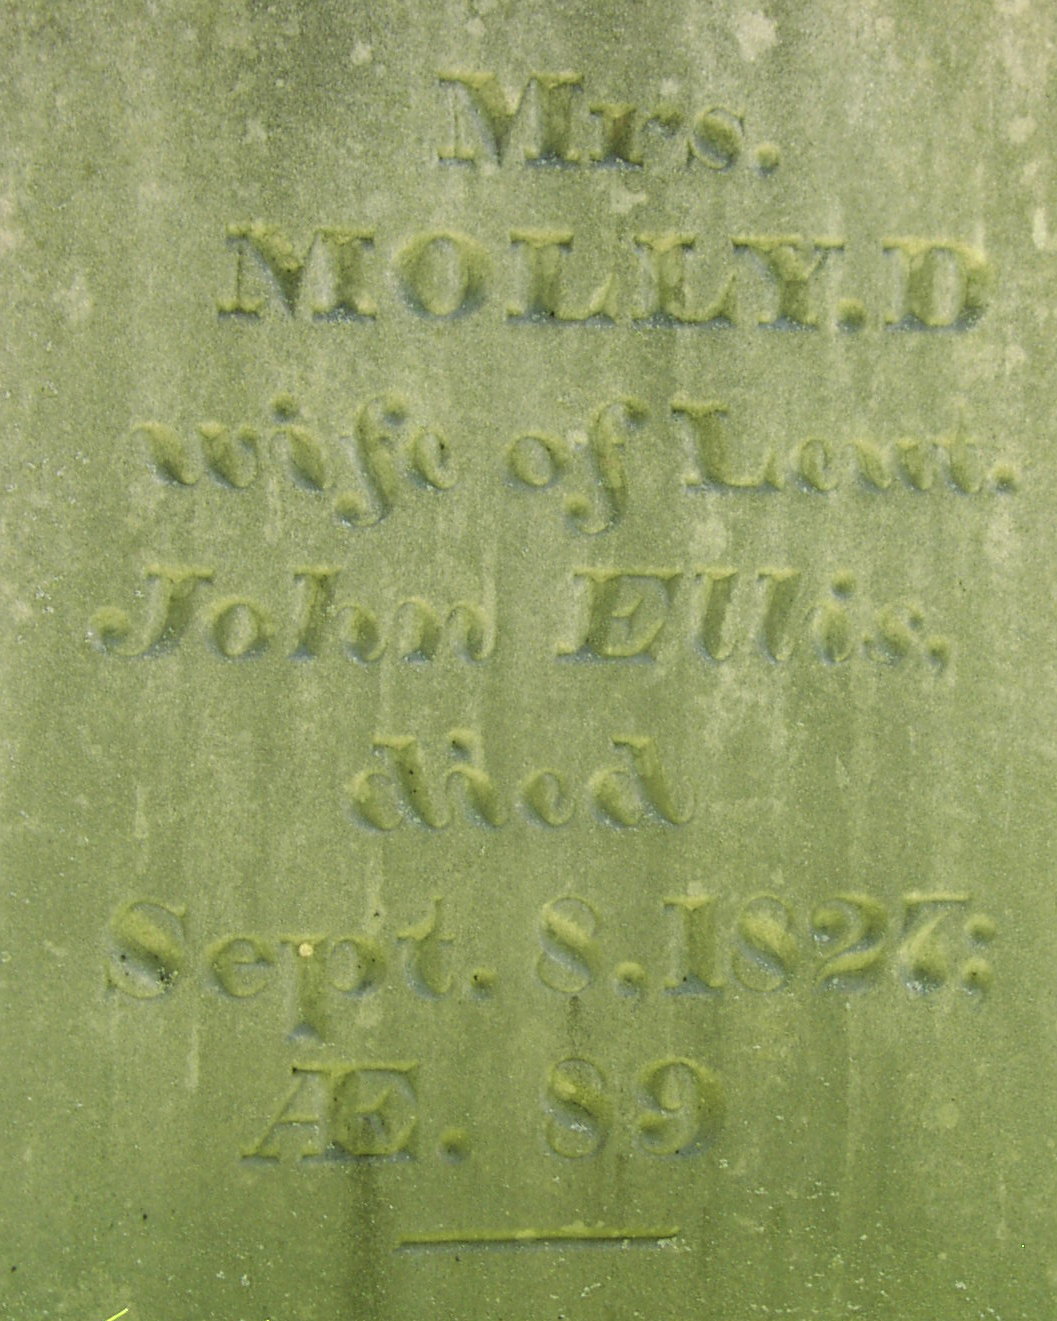 Gravestone inscription of Molly D. Ellis